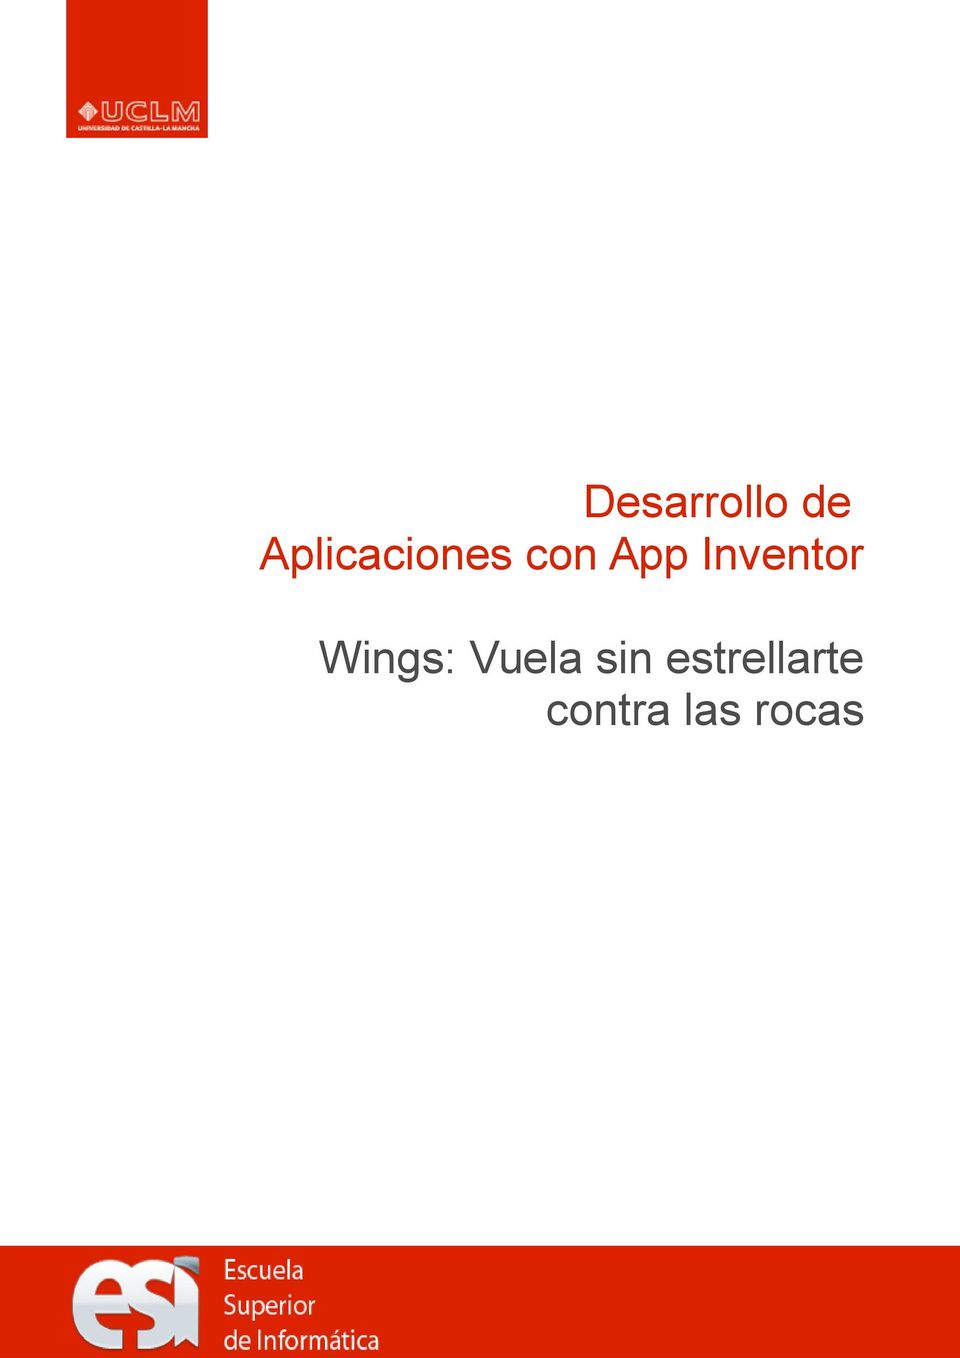 Inventor Wings: Vuela